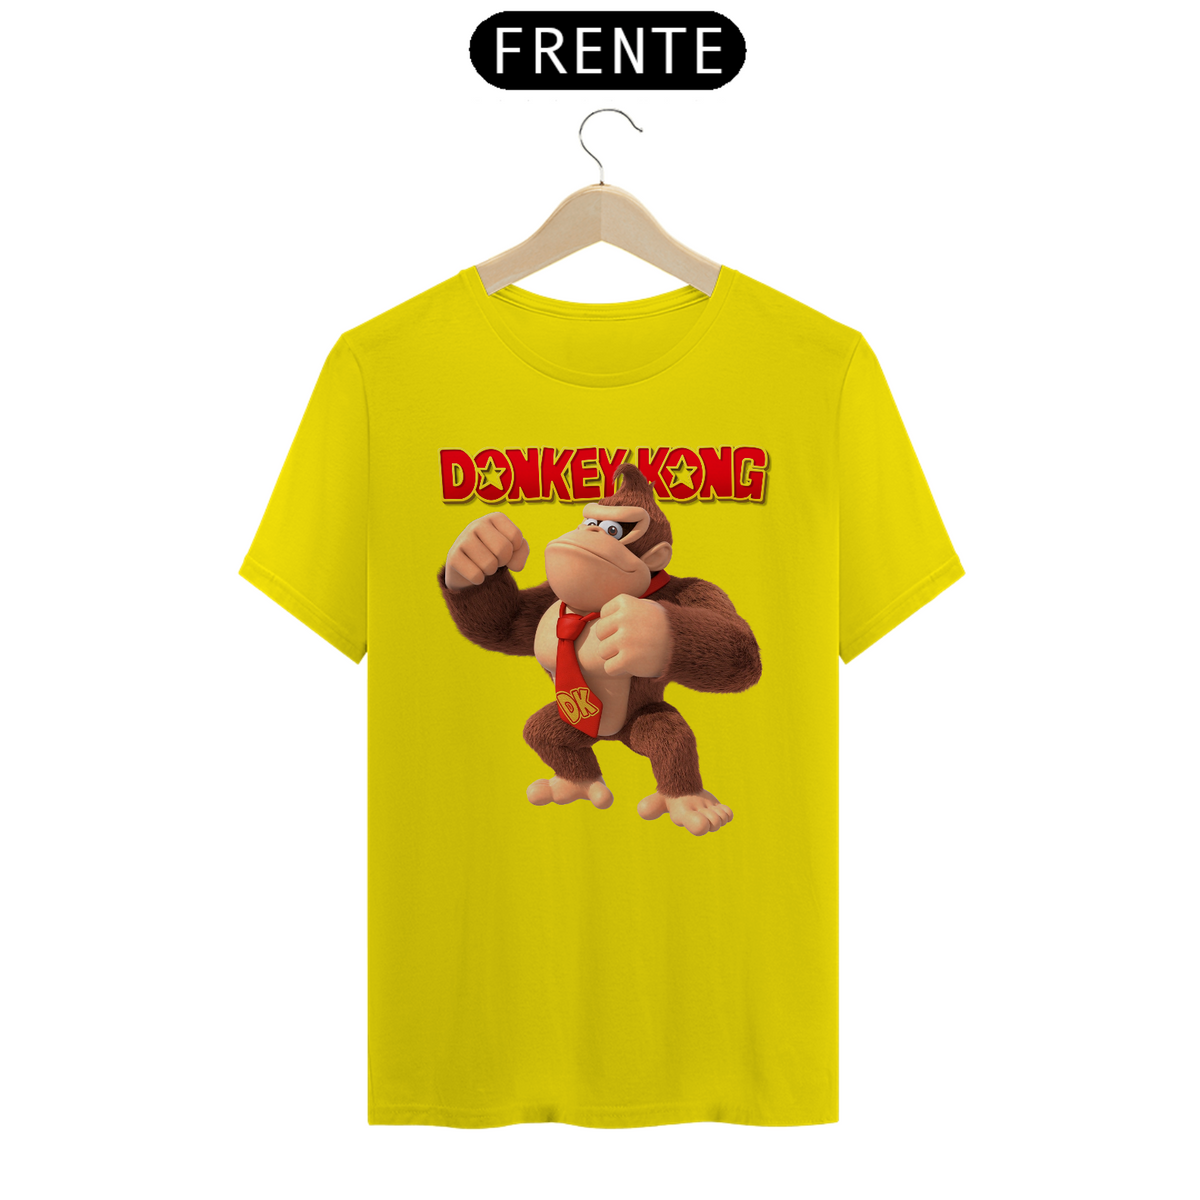 Nome do produto: Donkey Kong